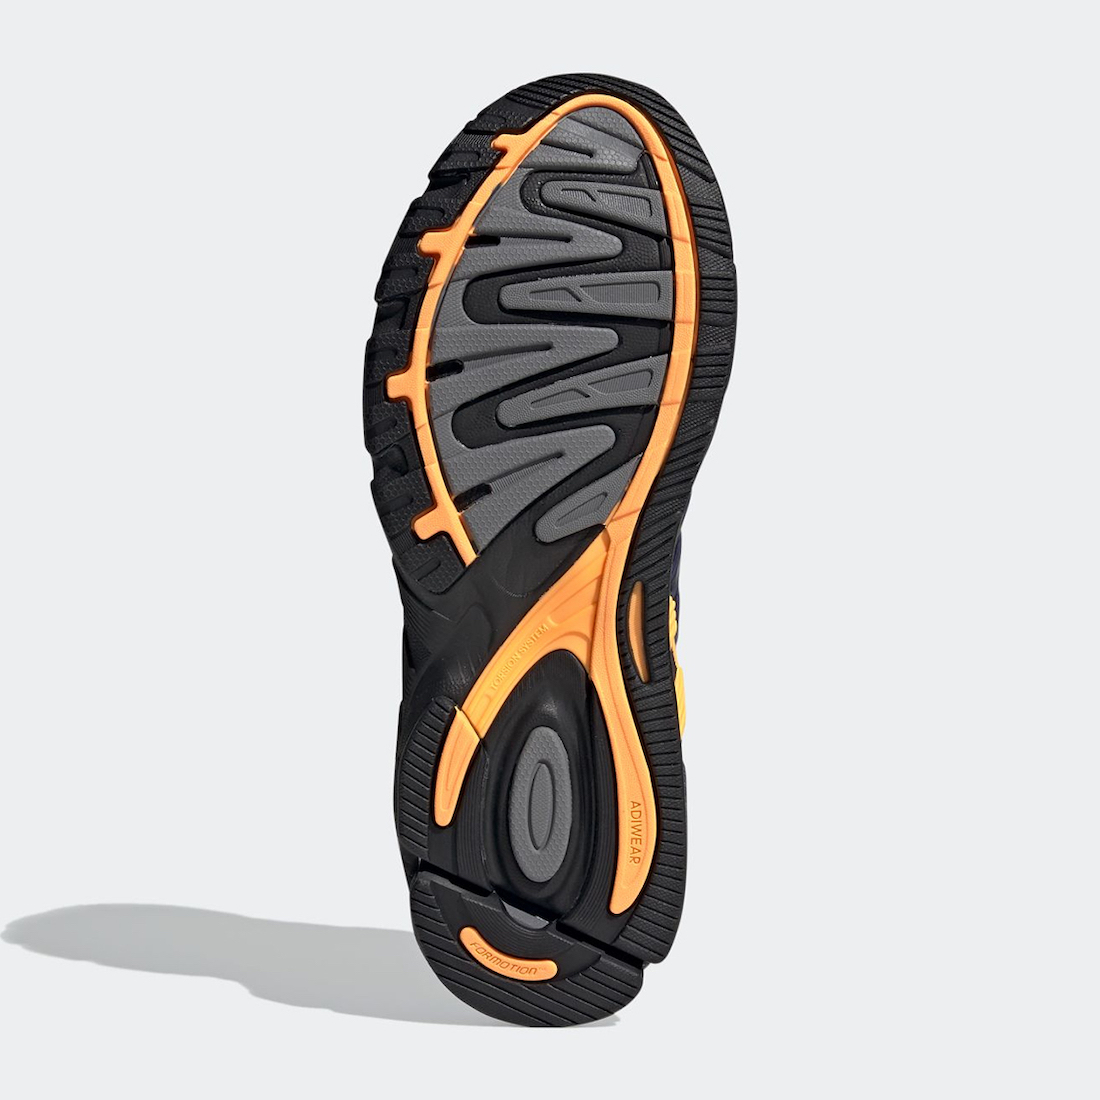 adidas Response CL Grey Flash Orange FX7725 Release Date